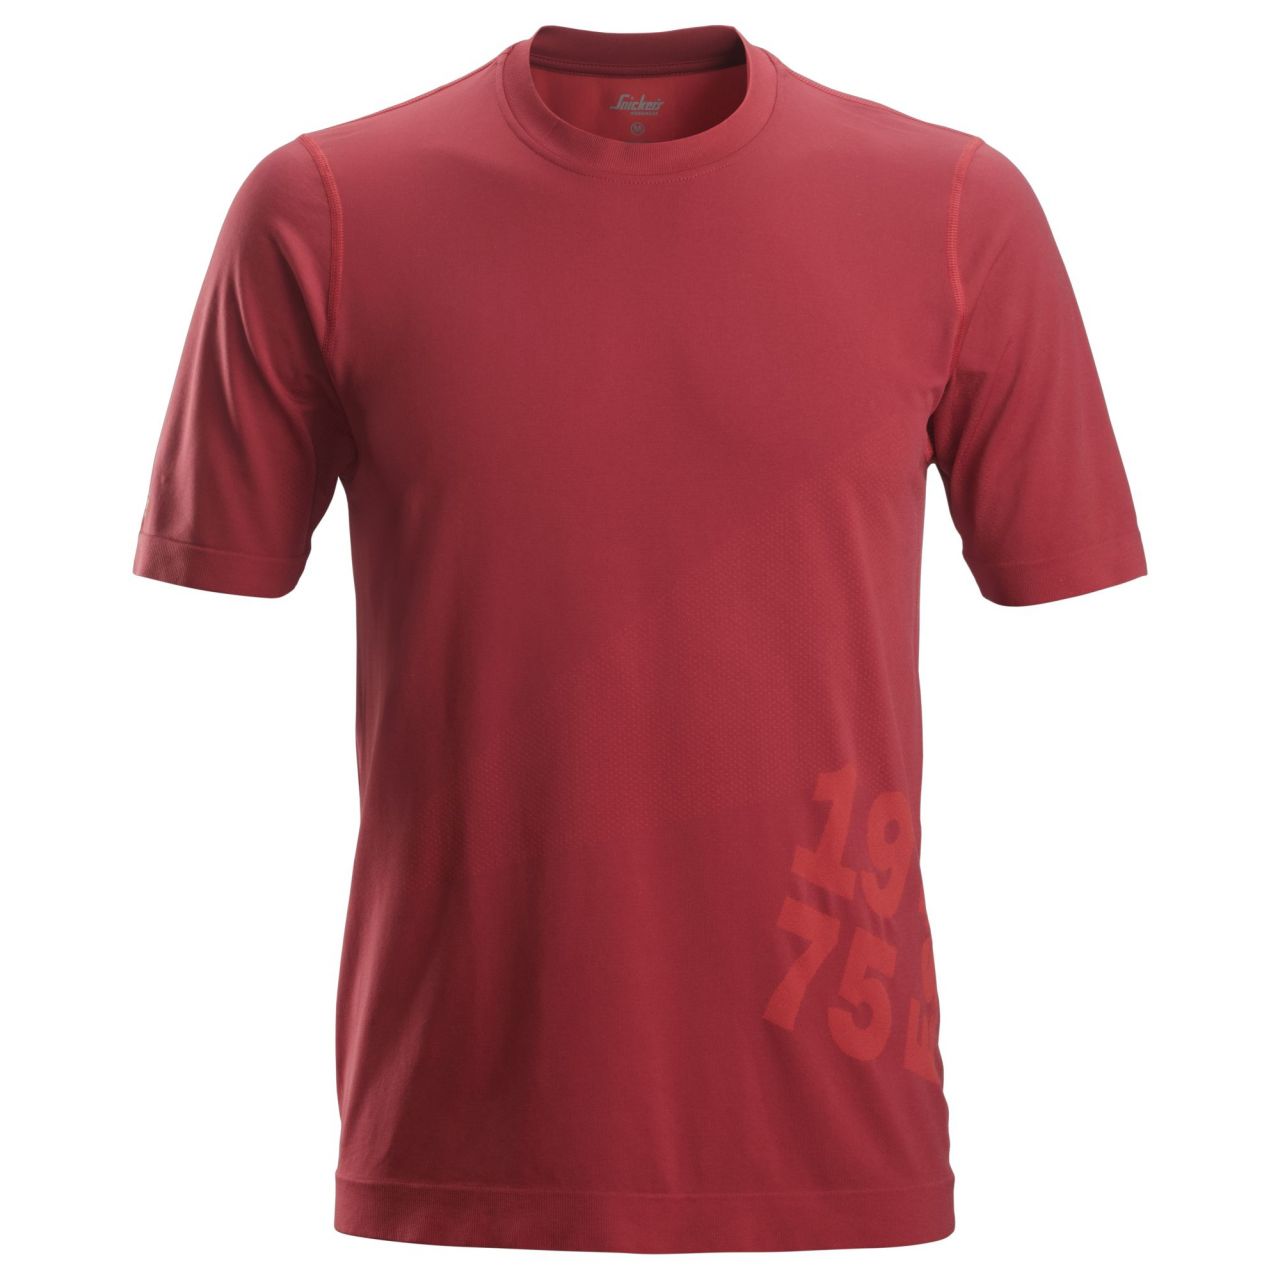 2519 Camiseta FlexiWork 37.5® Tech rojo talla XS